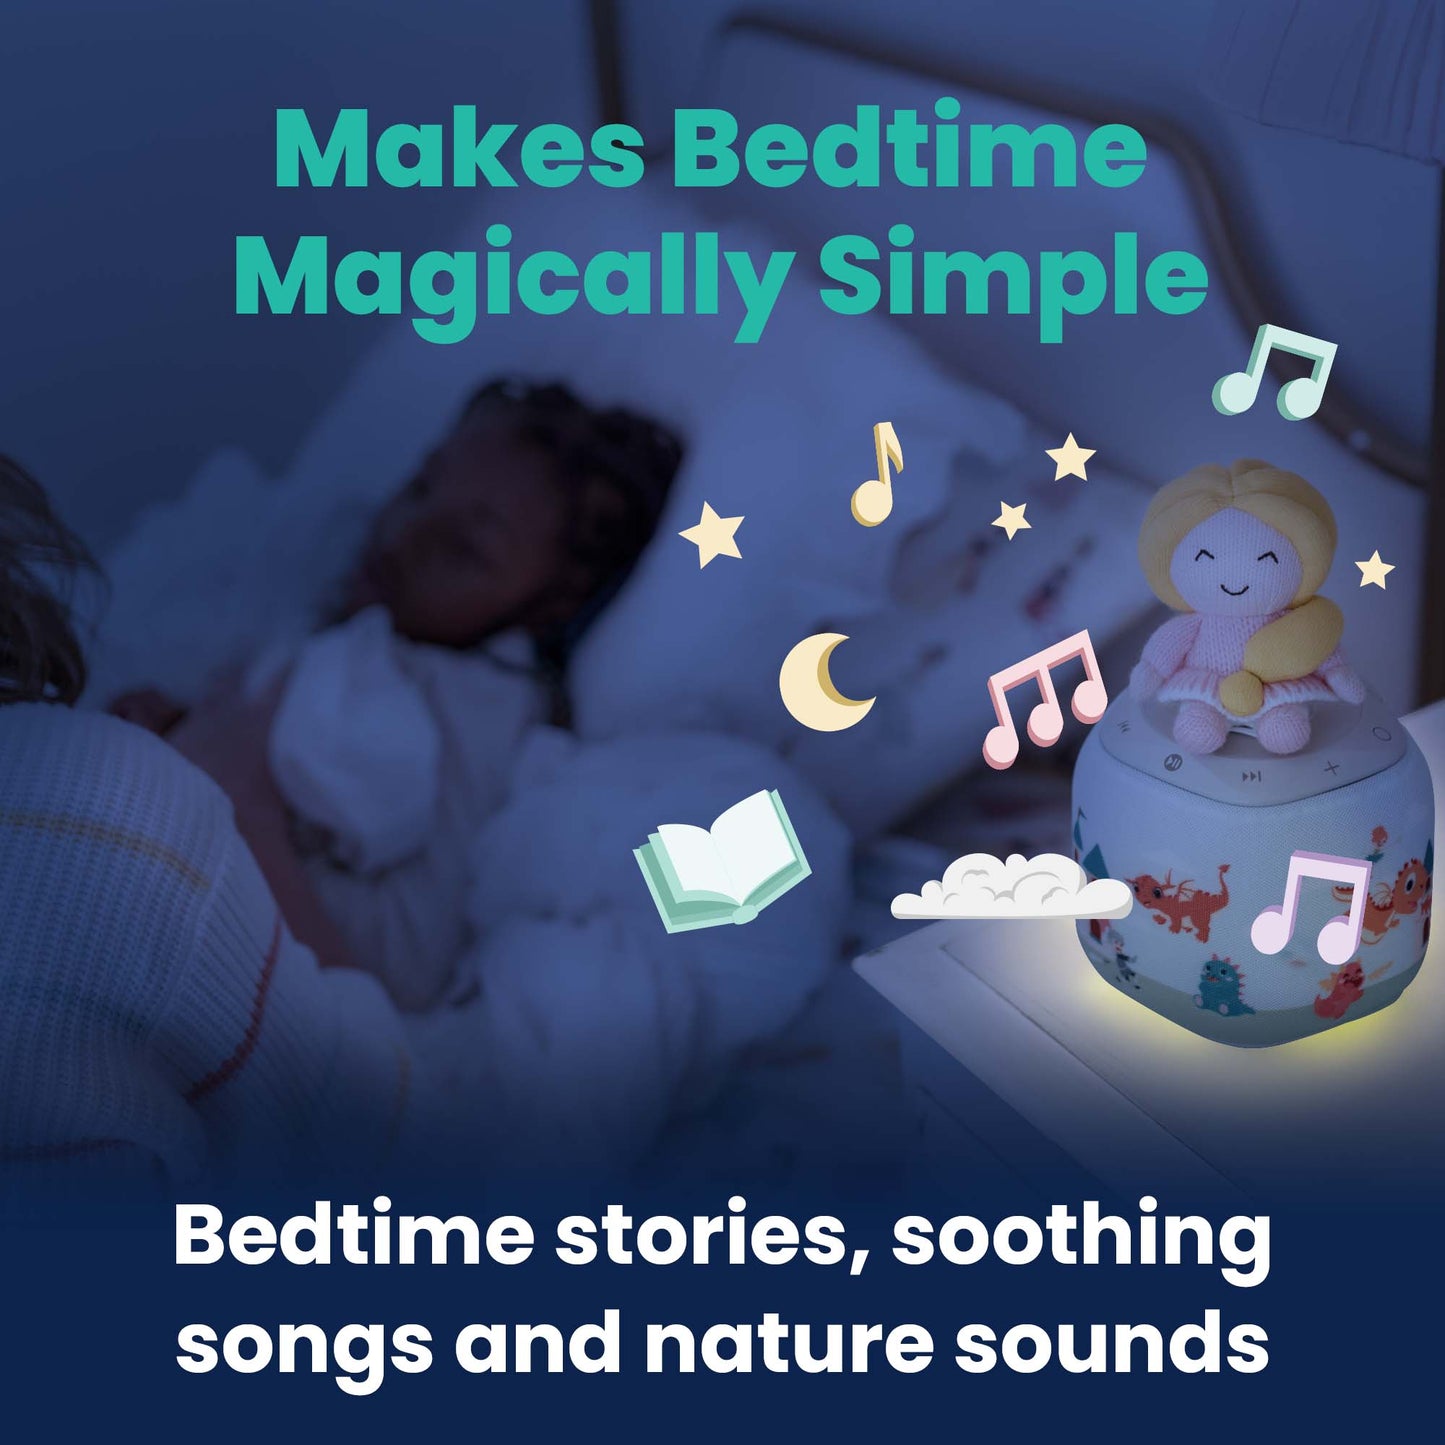 Storypod Bedtime Bundle - Ages 0-3